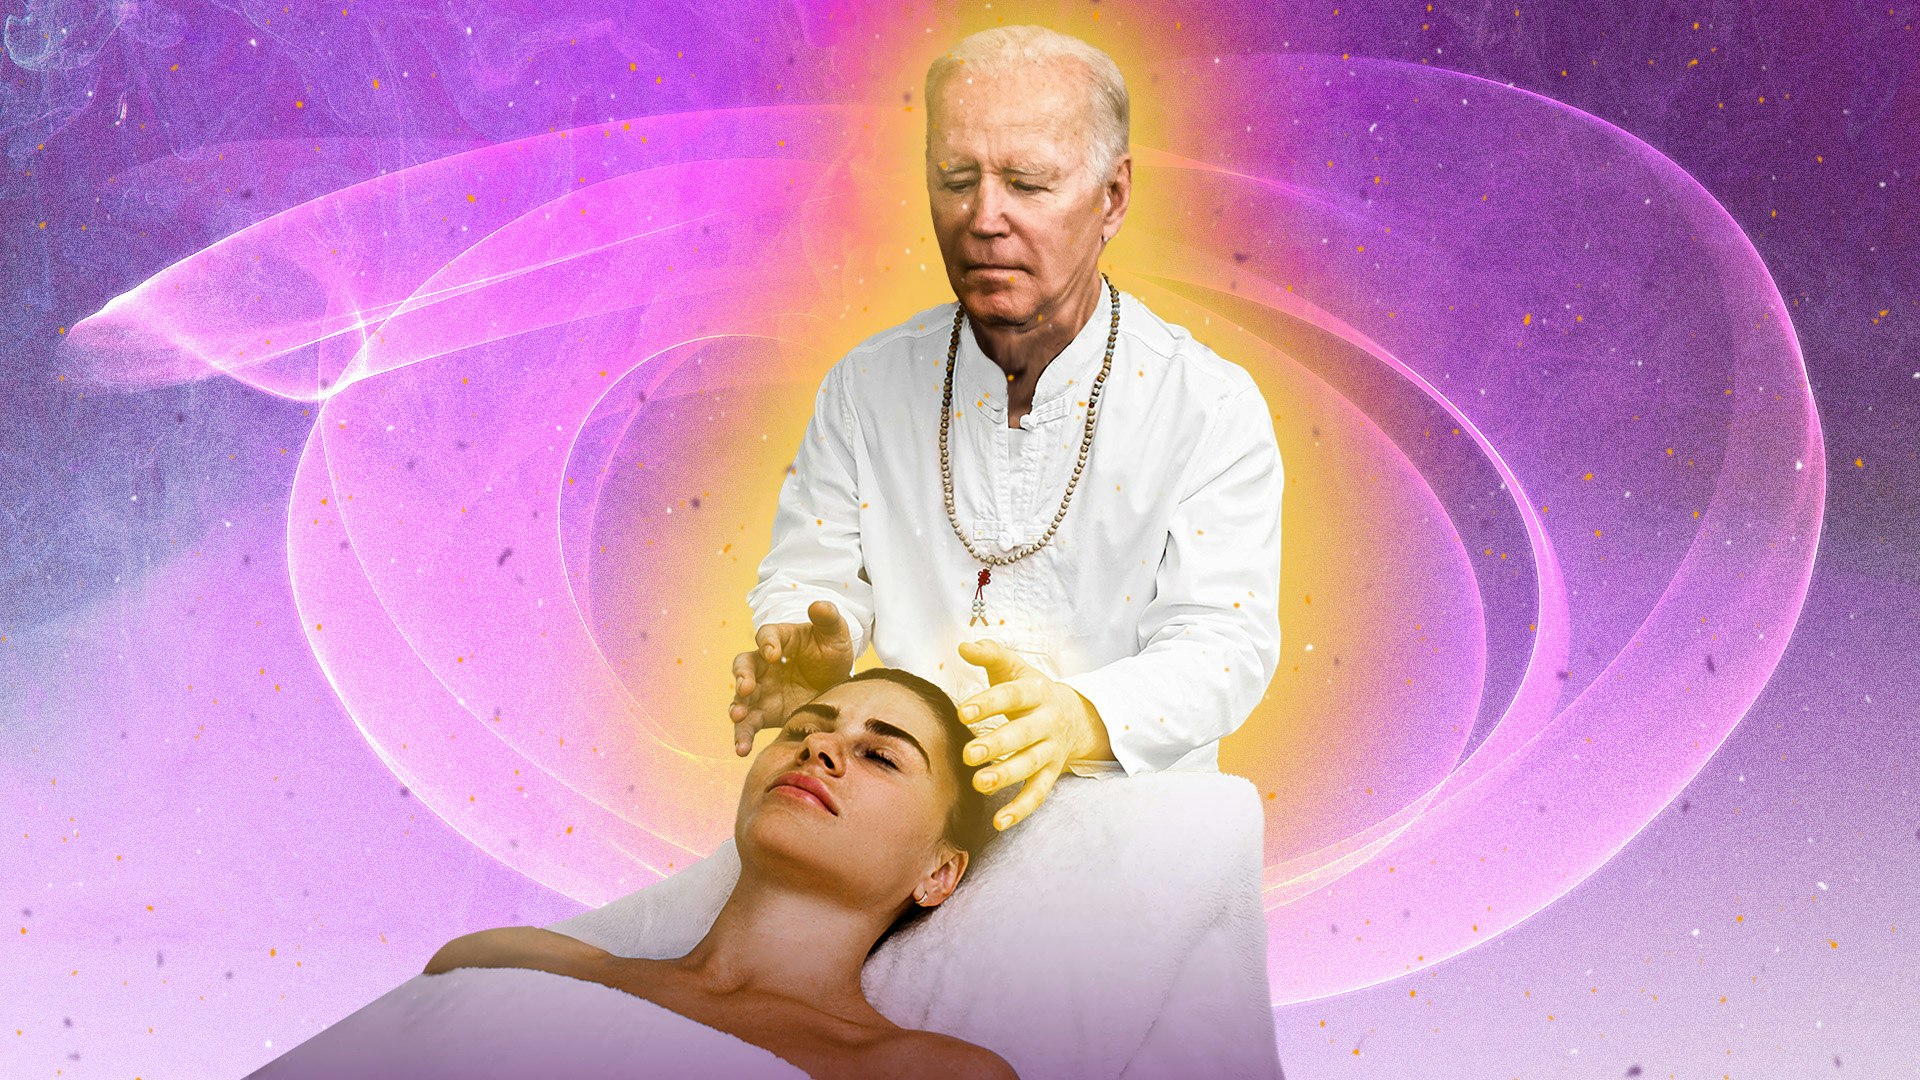 Ep. 1497 - Joe Biden Wants To Heal Your Soul